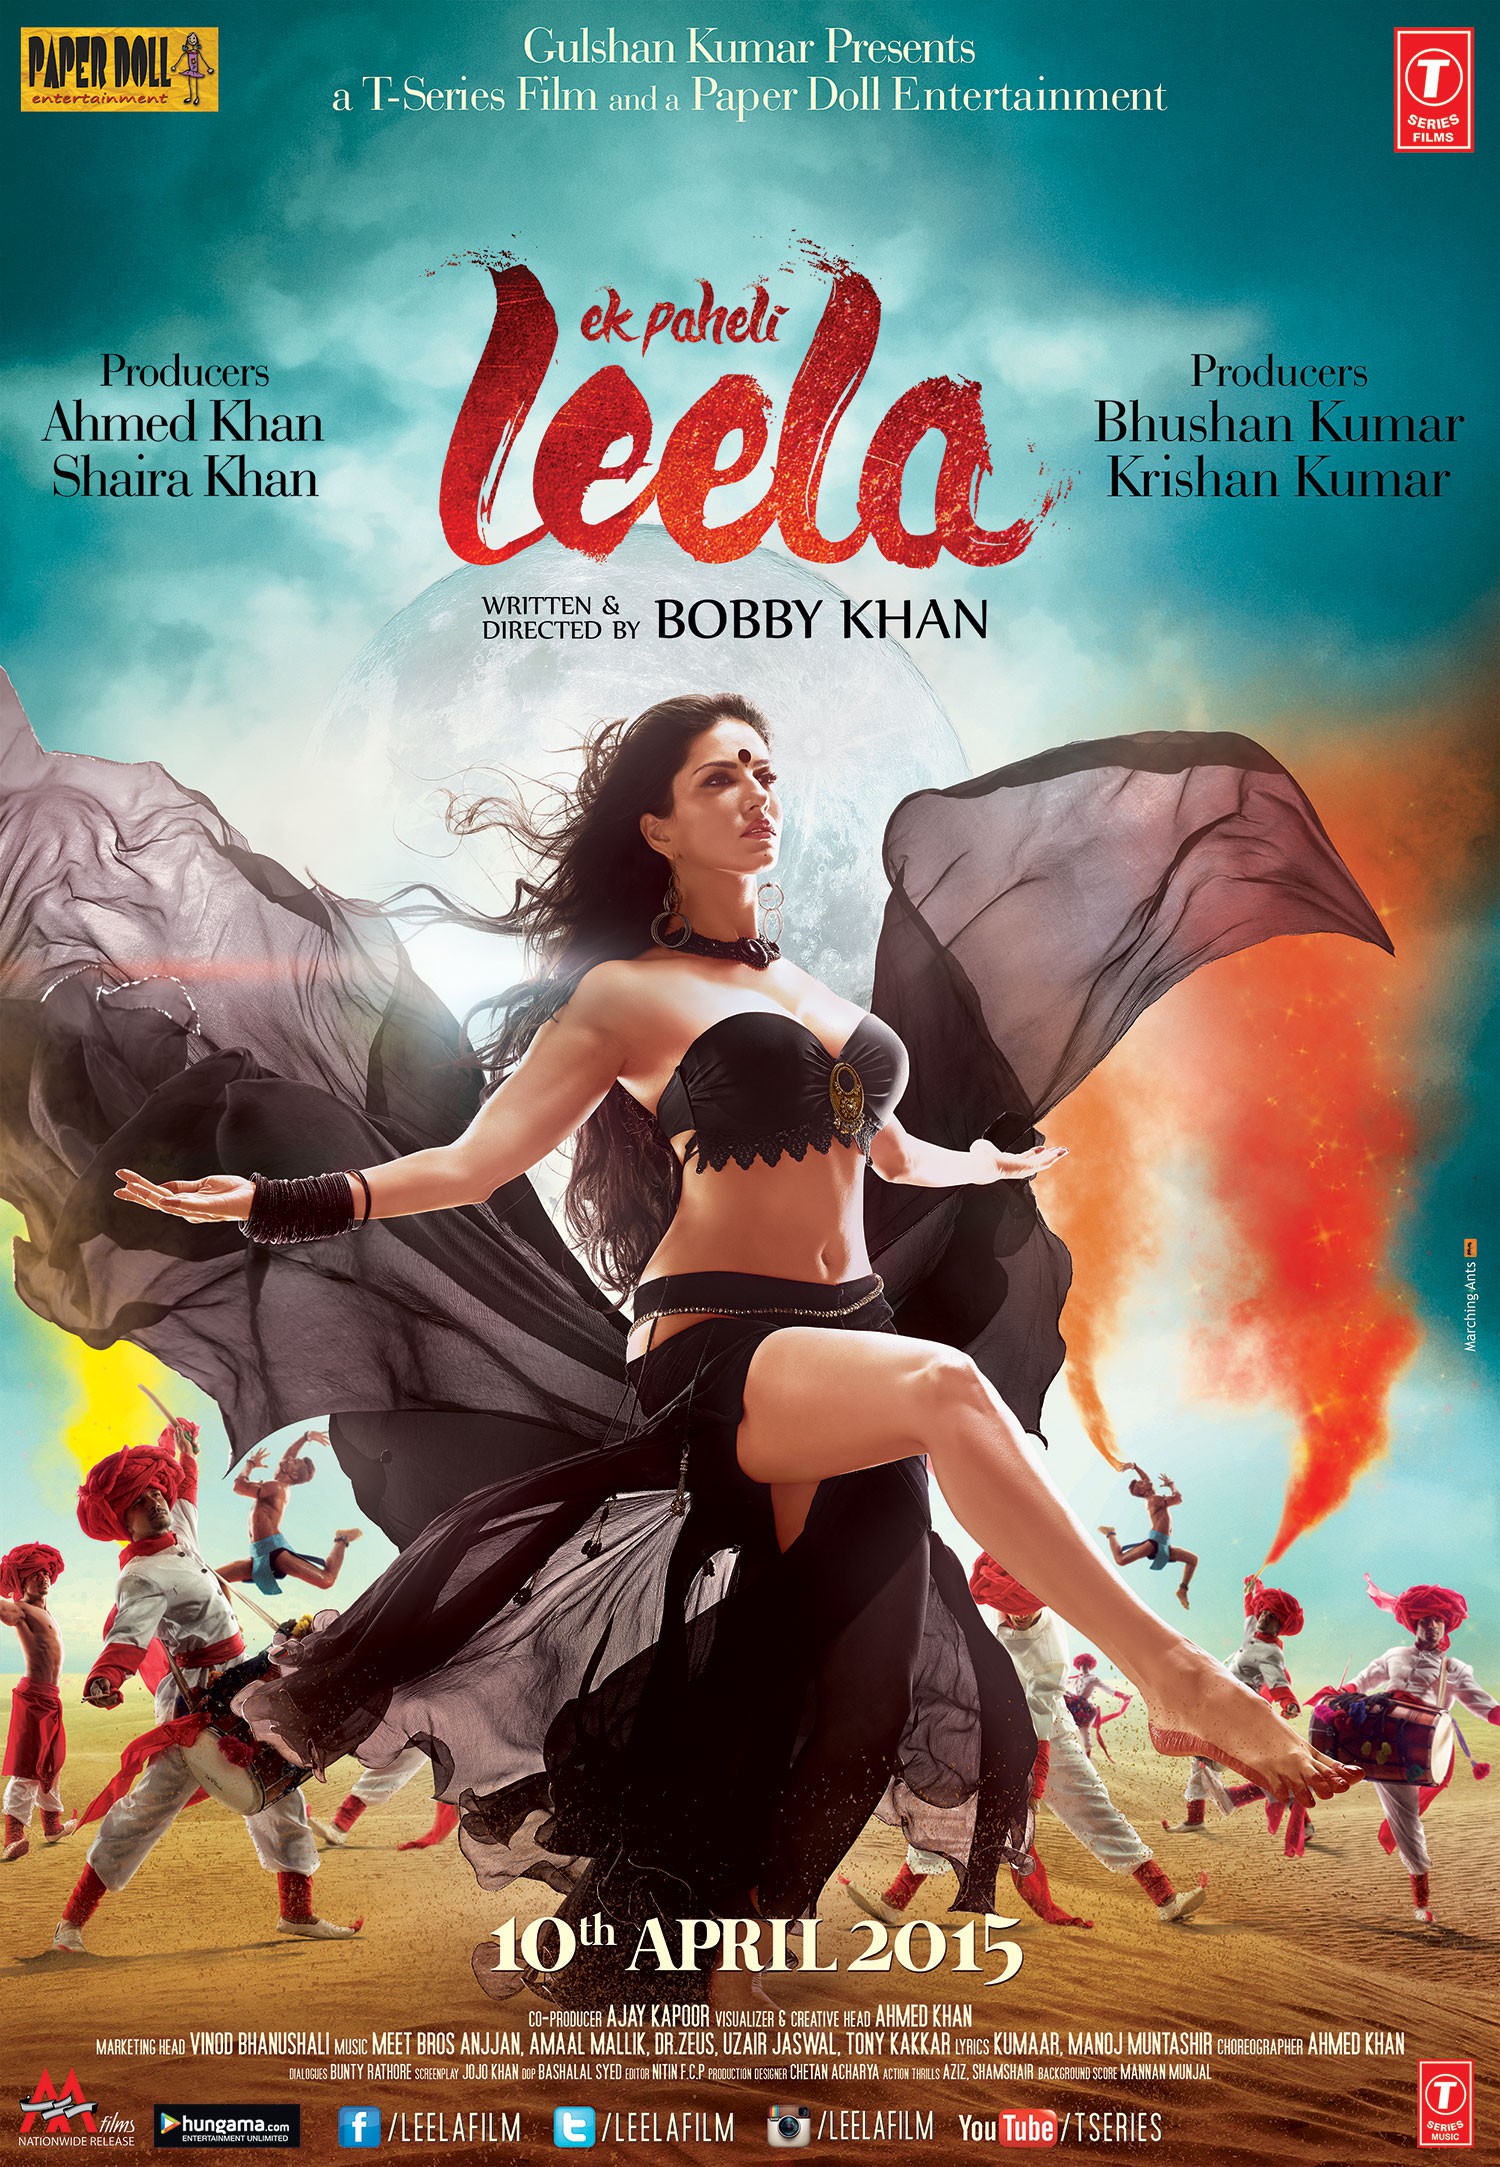 Mega Sized Movie Poster Image for Ek Paheli Leela (#2 of 4)